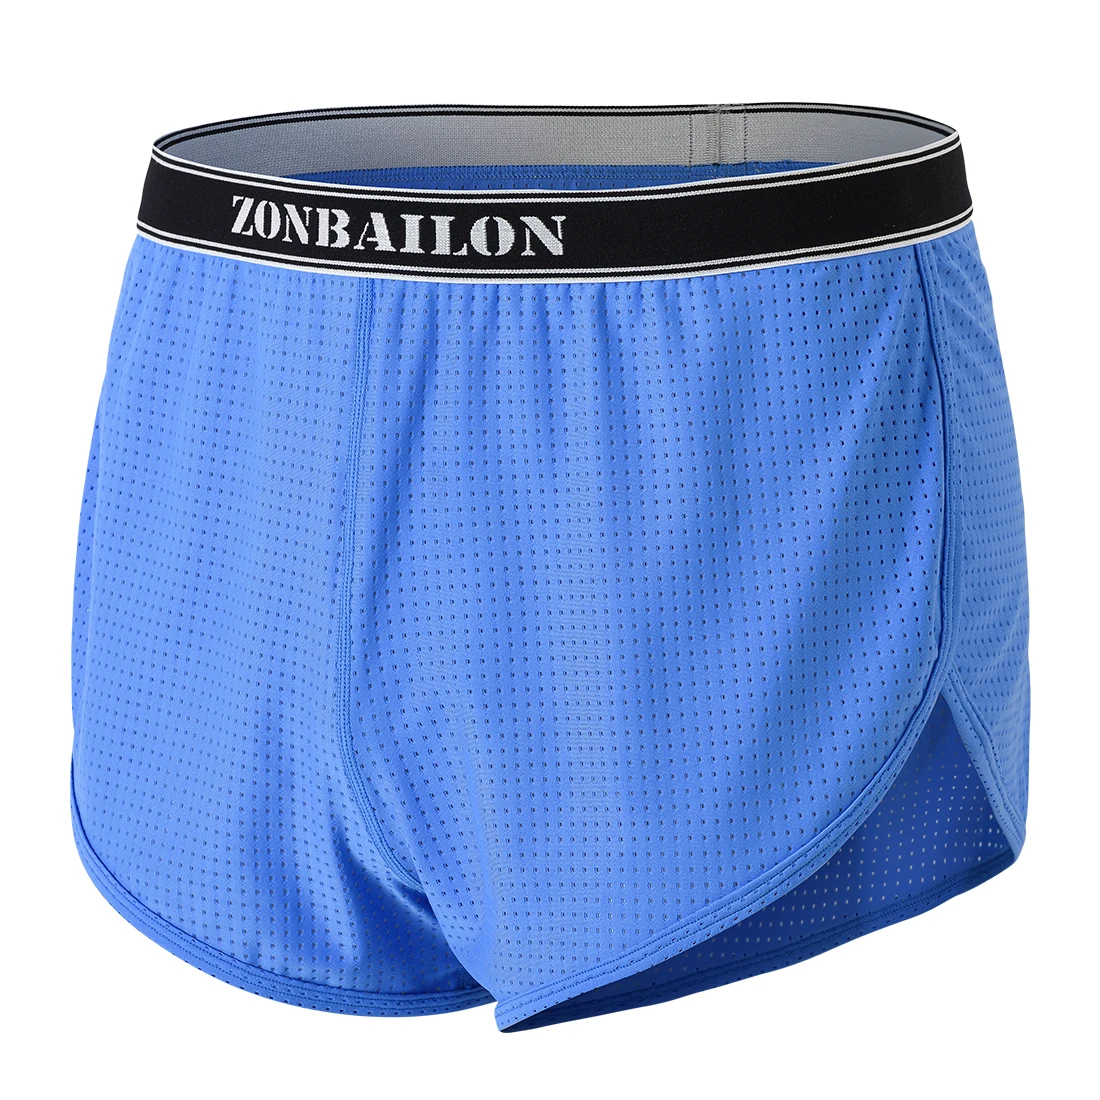 Zonbailon New Men's Boxer Underwear SexyFull Coverage Hip with Low Rise Short Briefs Trunks Style Side Split Boxer Underwear